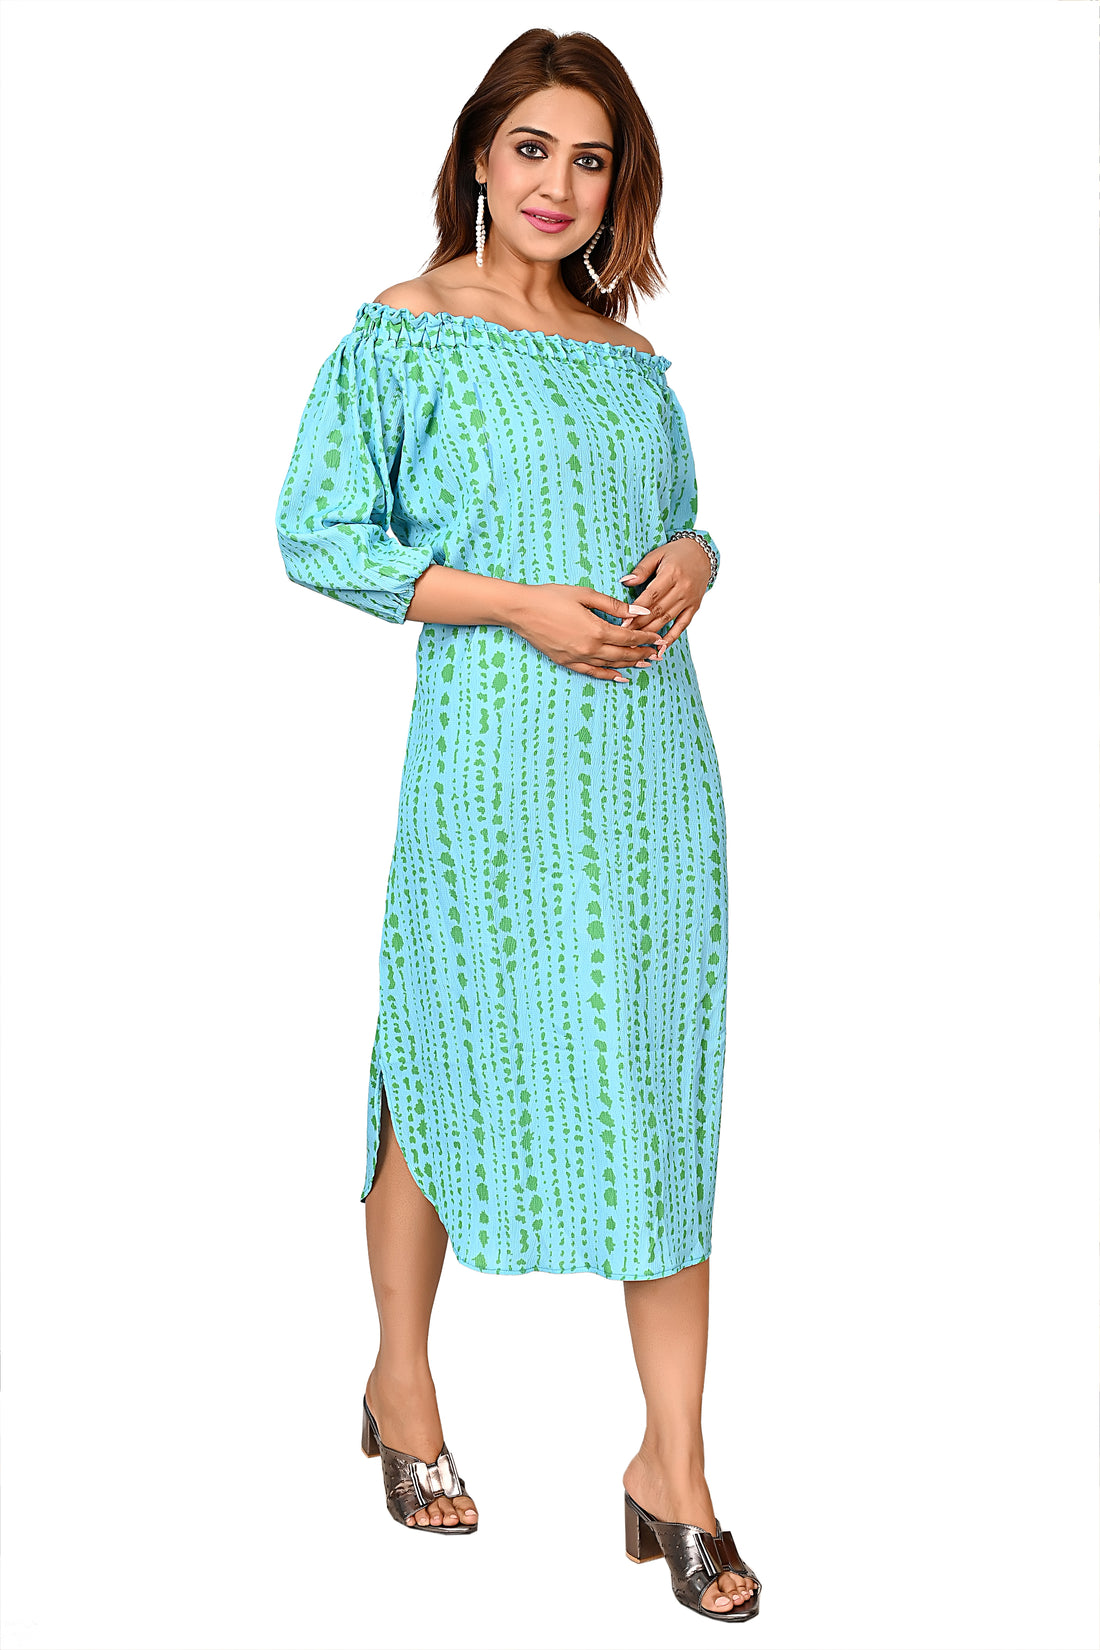 Nirmal online Premium Quality Off Shoulder Dress for Women in Aqua Blue Colour Print